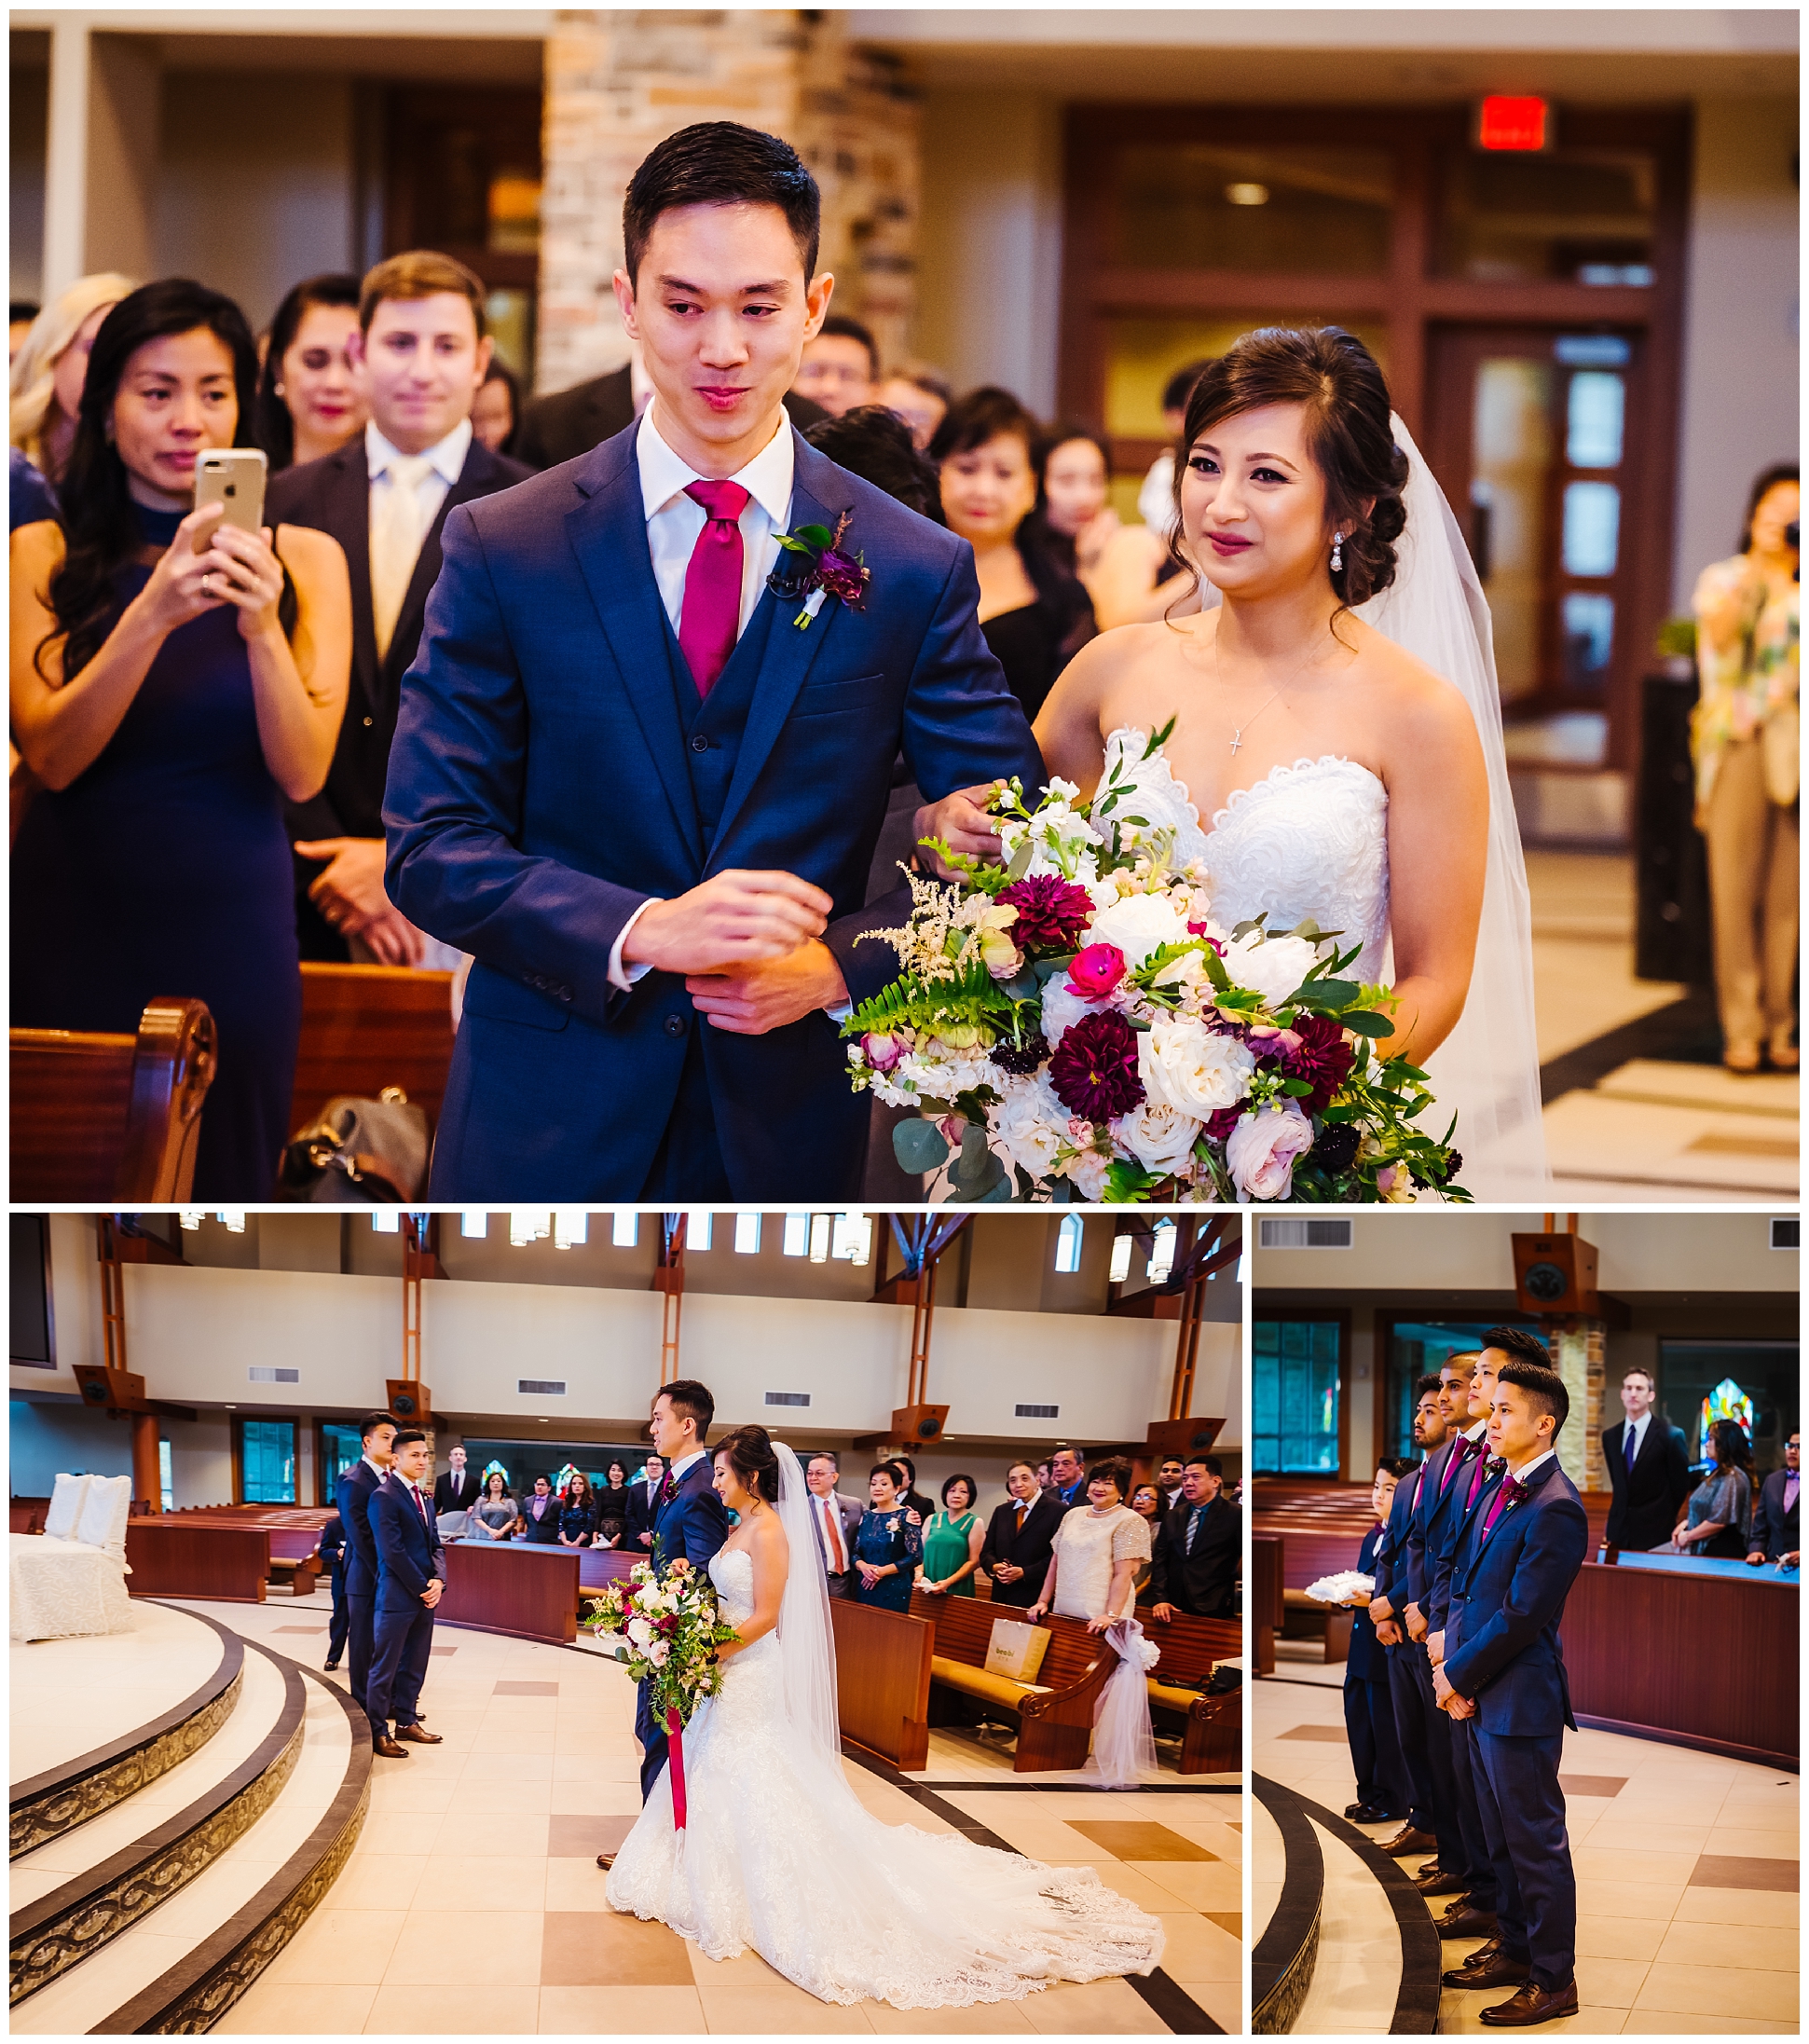 tampa-wedding-photographer-philipino-colorful-woods-ballroom-church-mass-confetti-fuscia_0031.jpg